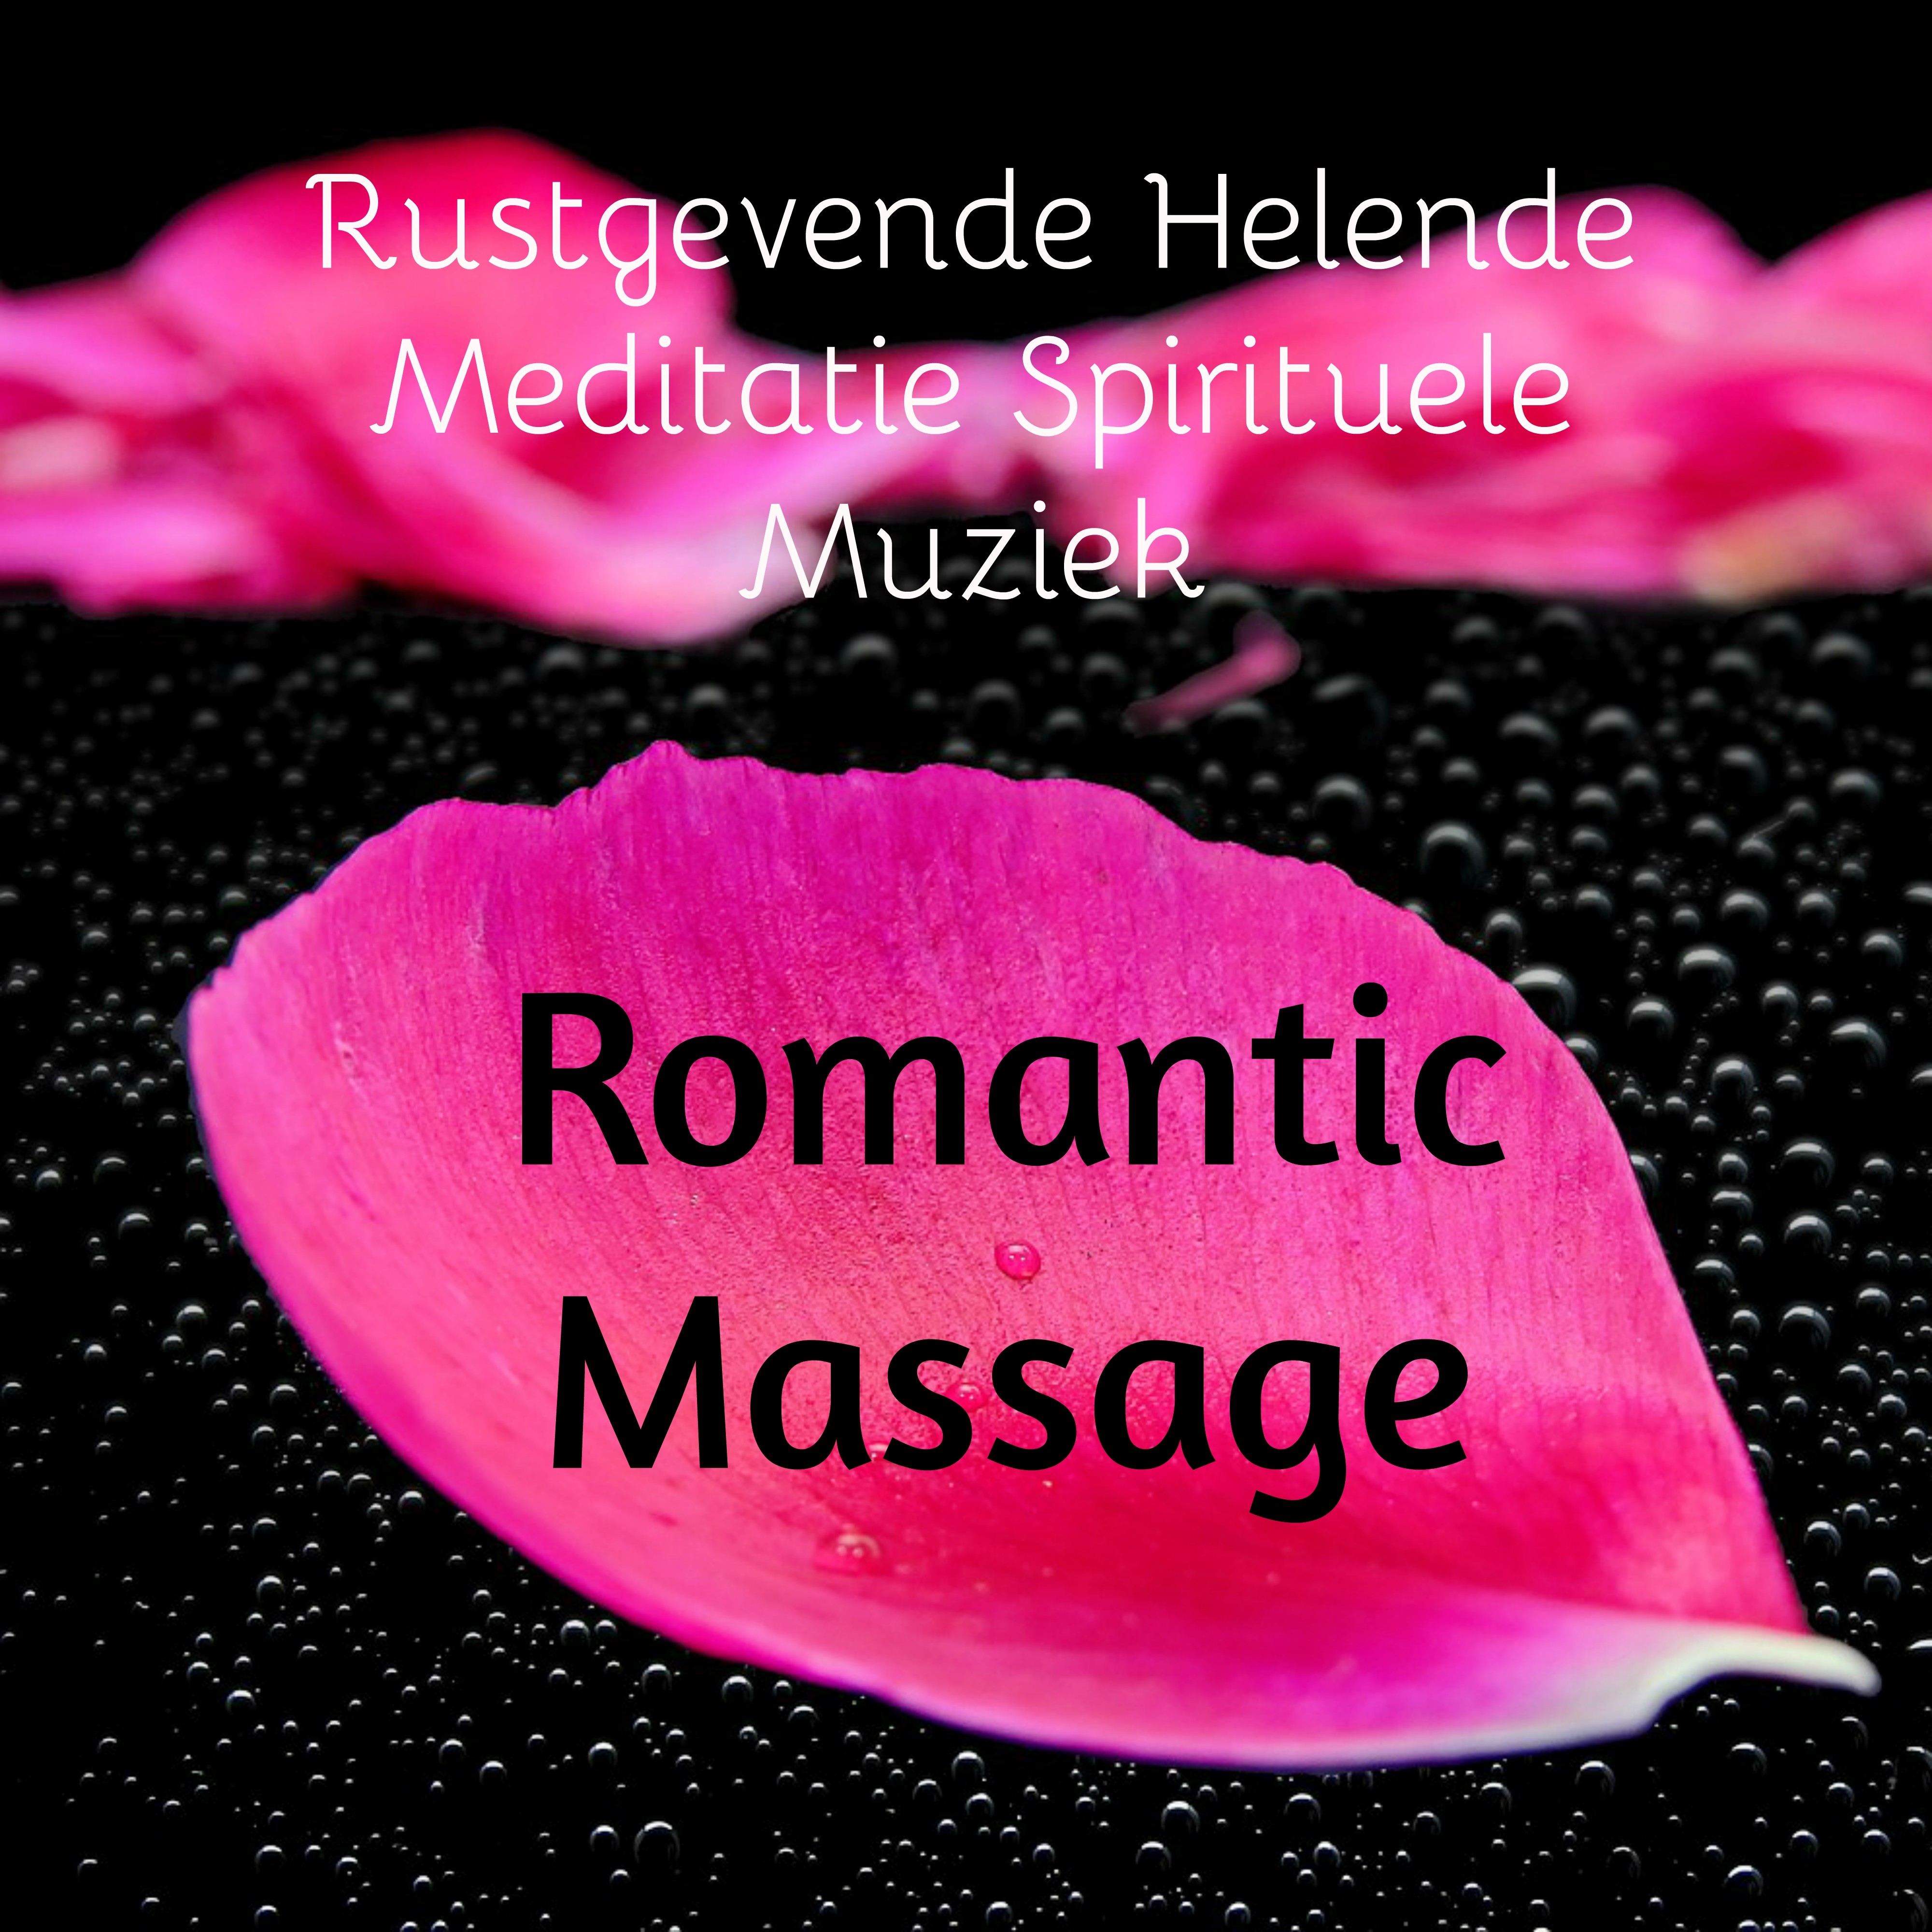 Romantic Massage - Rustgevende Helende Meditatie Spirituele Muziek met Chillout Lounge Piano Bar Geluiden